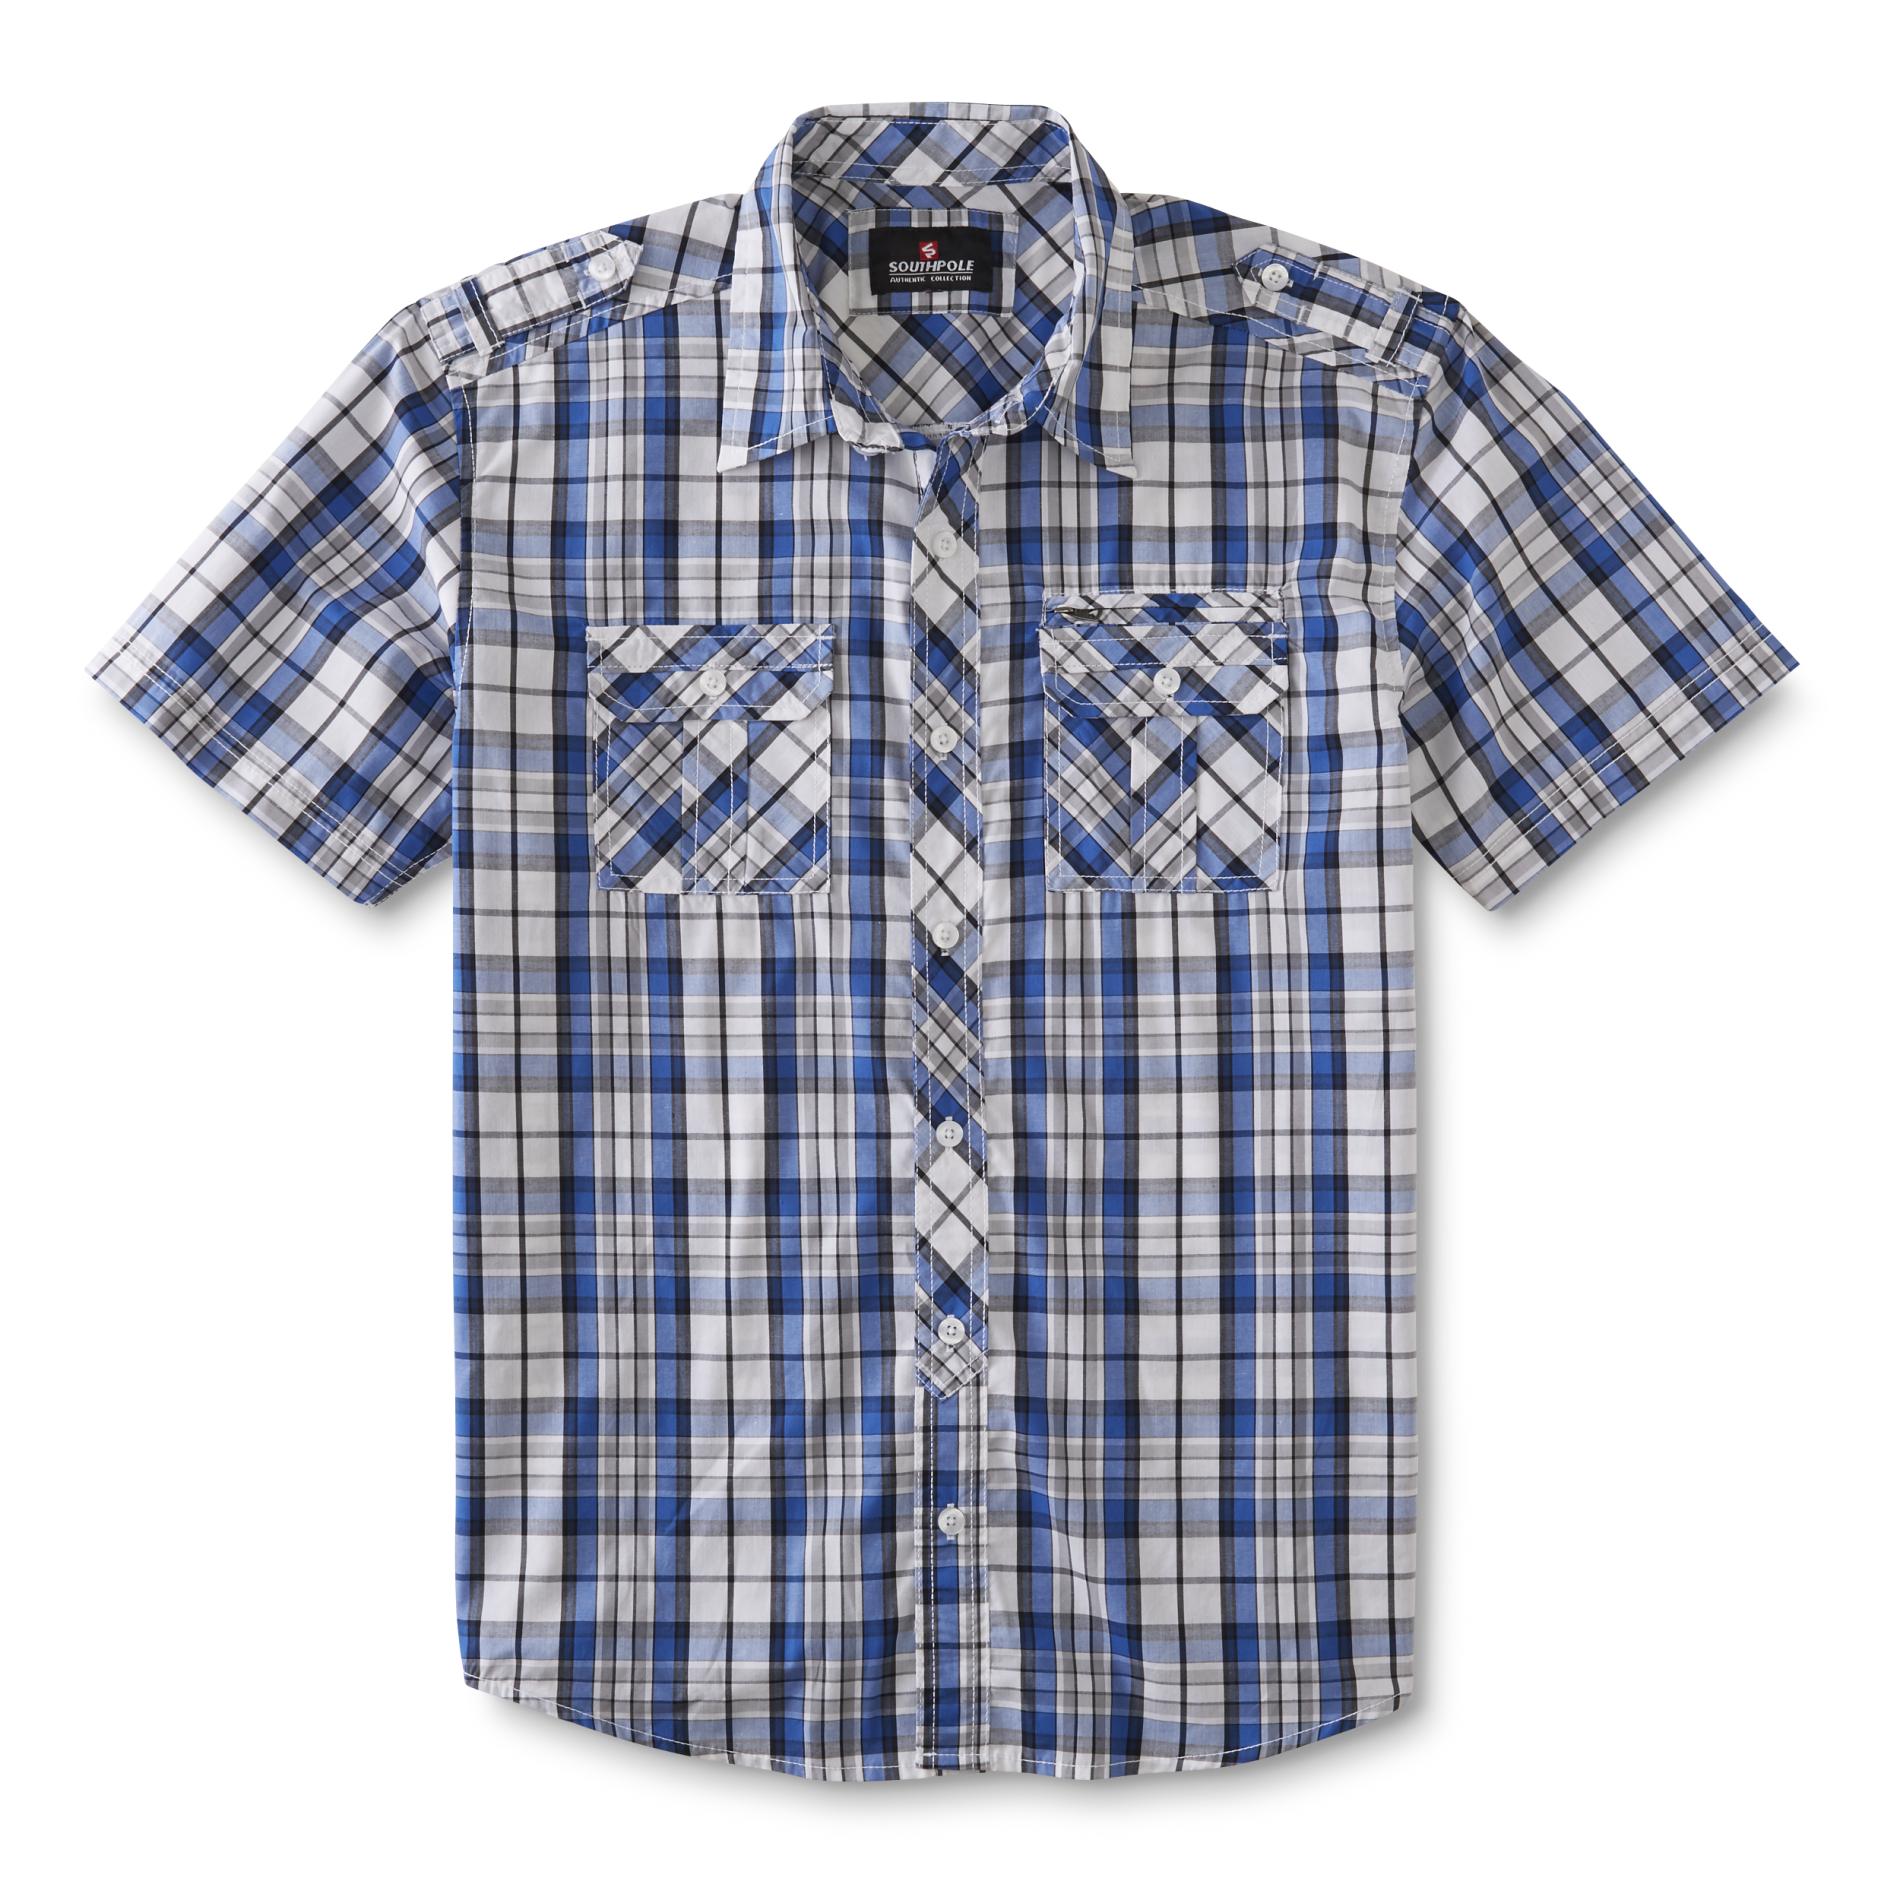 Southpole Young Men's Woven Shirt - Plaid